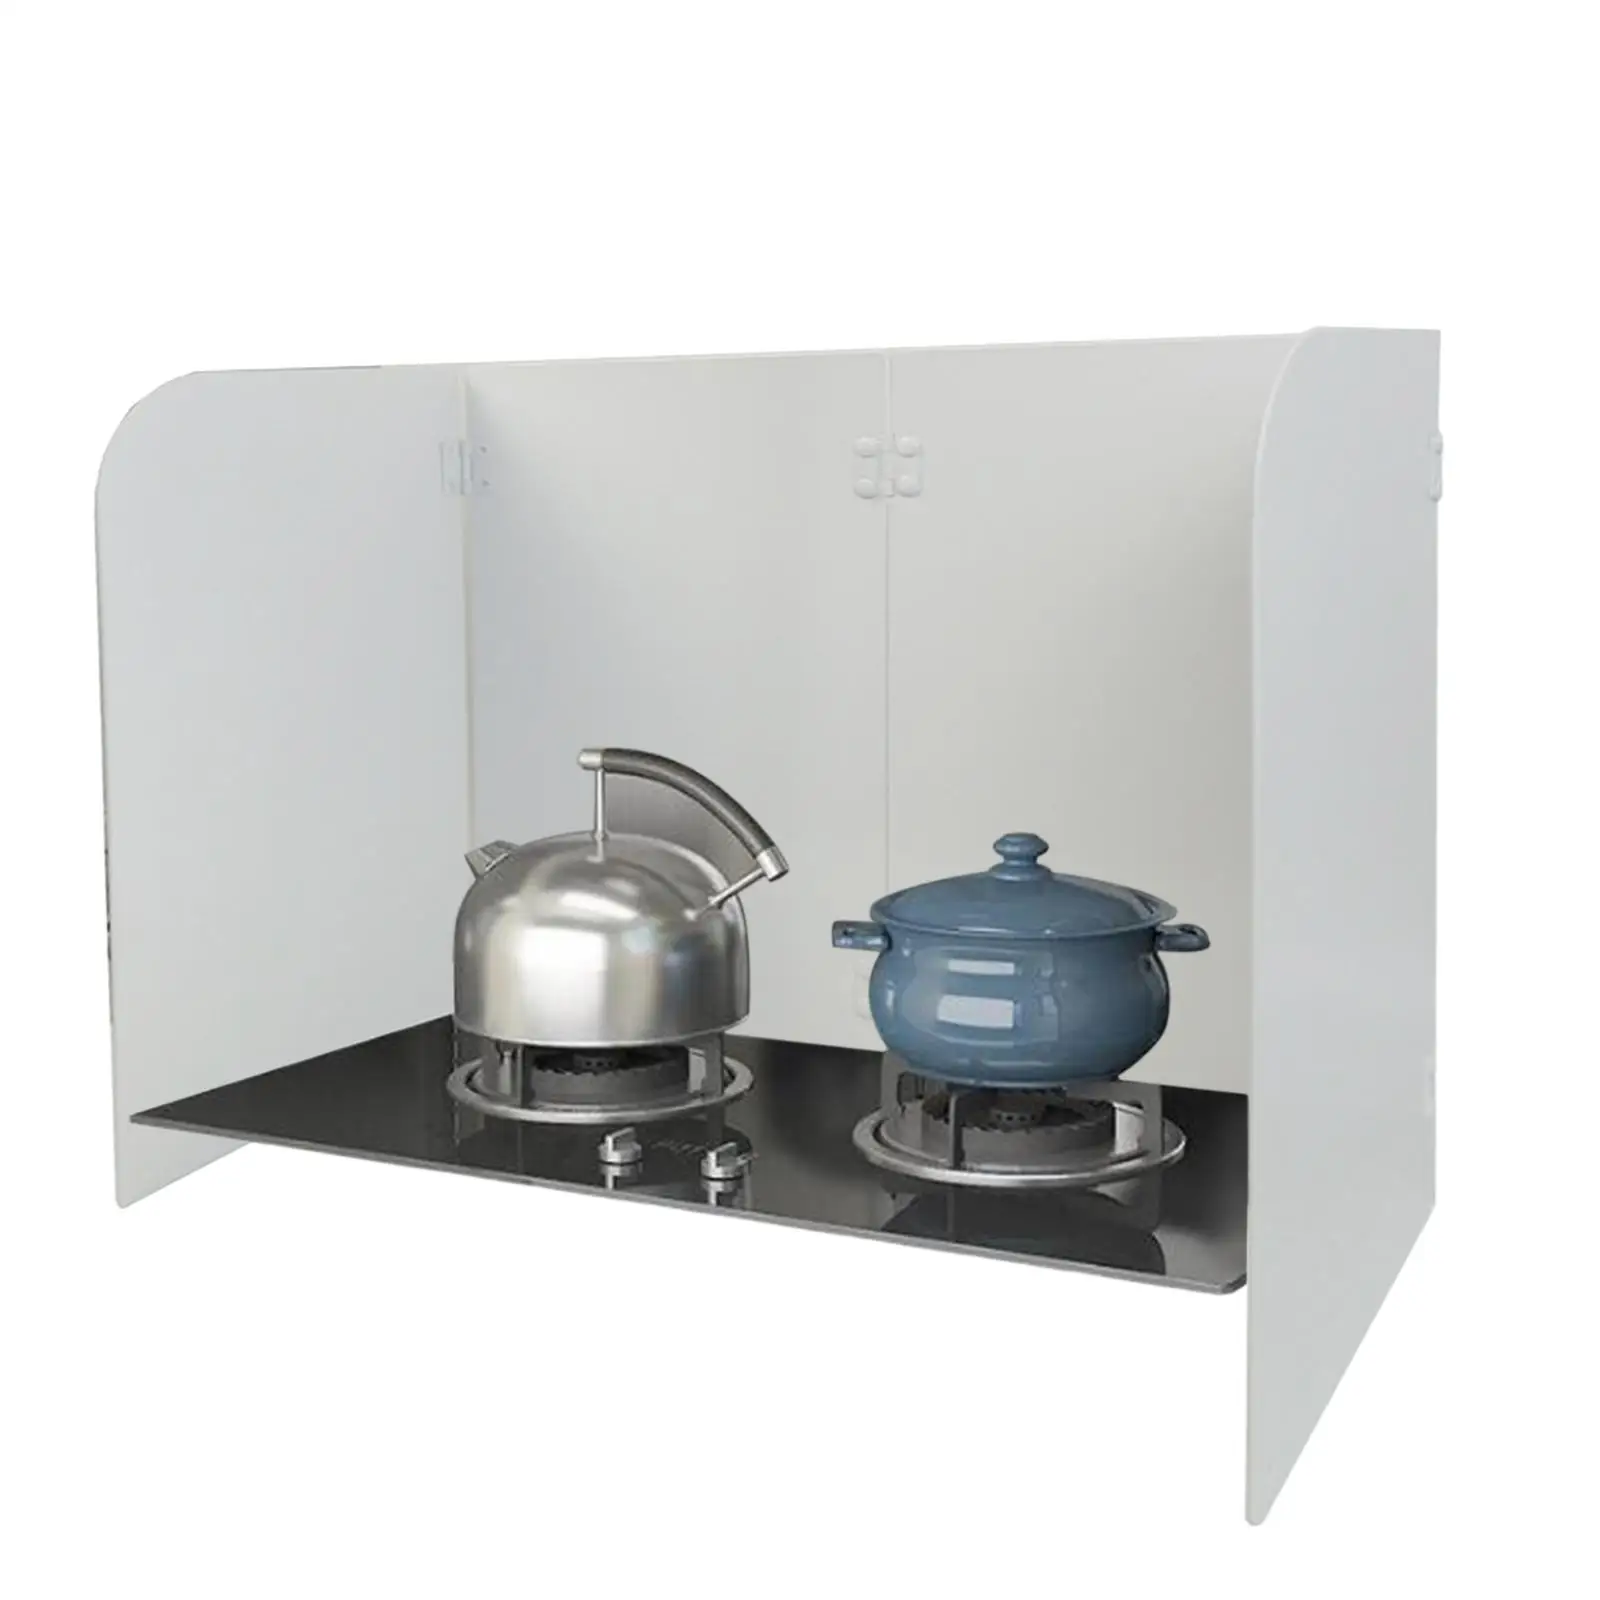 Oil Splash Guard Kitchen Tools Foldable Anti Splatter Sheet Oil Barrier for Cooktop Gas top Restaurant Cooking Frying